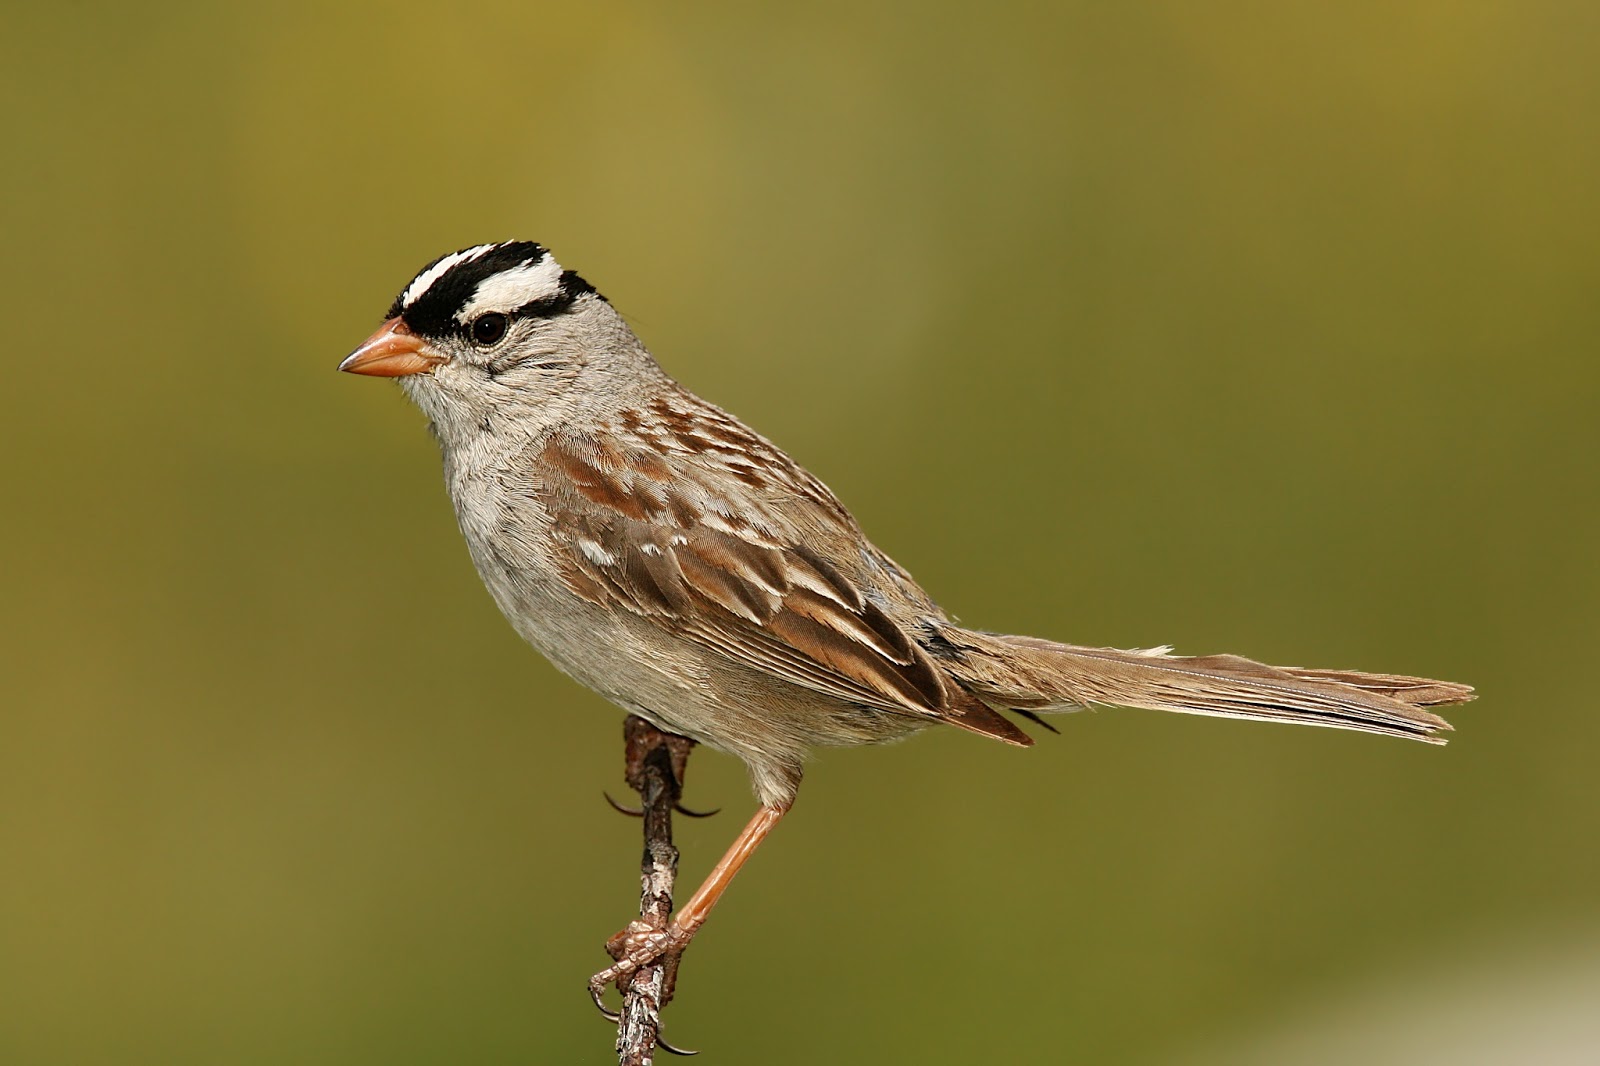 HD Wallpapers Fine: sparrow bird high resolution full hd ...